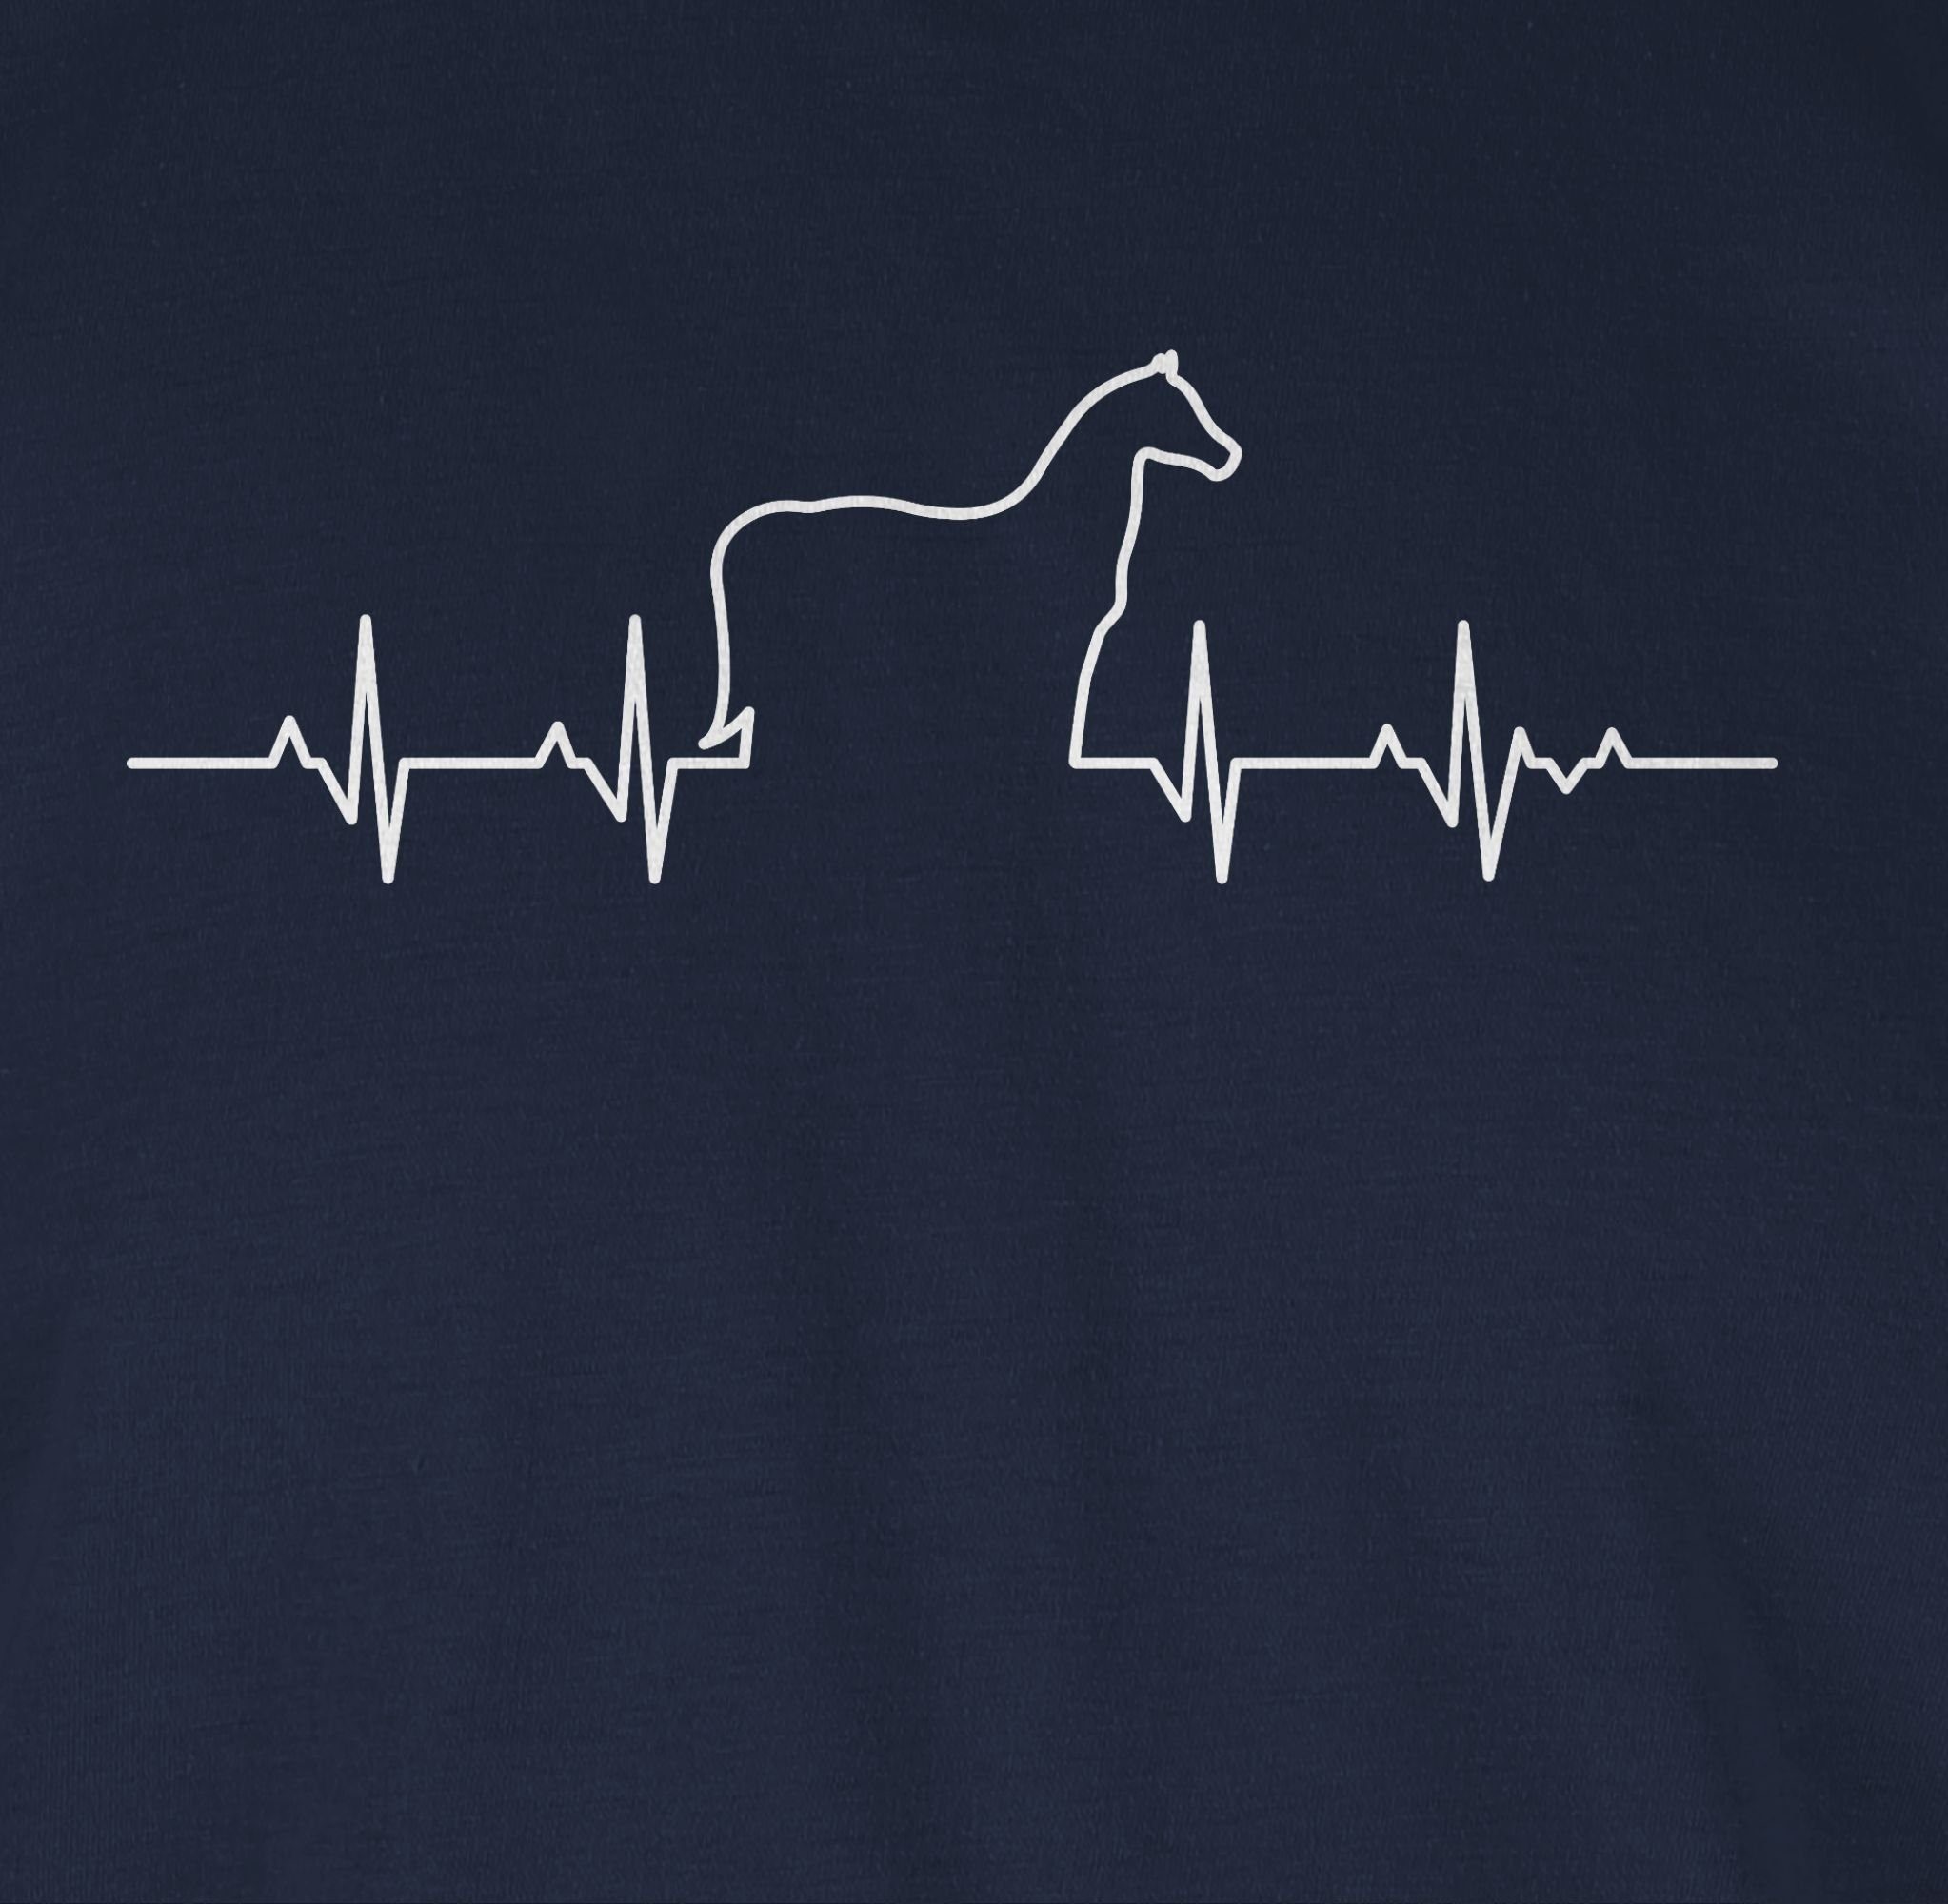 1 T-Shirt Navy Shirtracer Pferd Pferd Herzschlag Blau